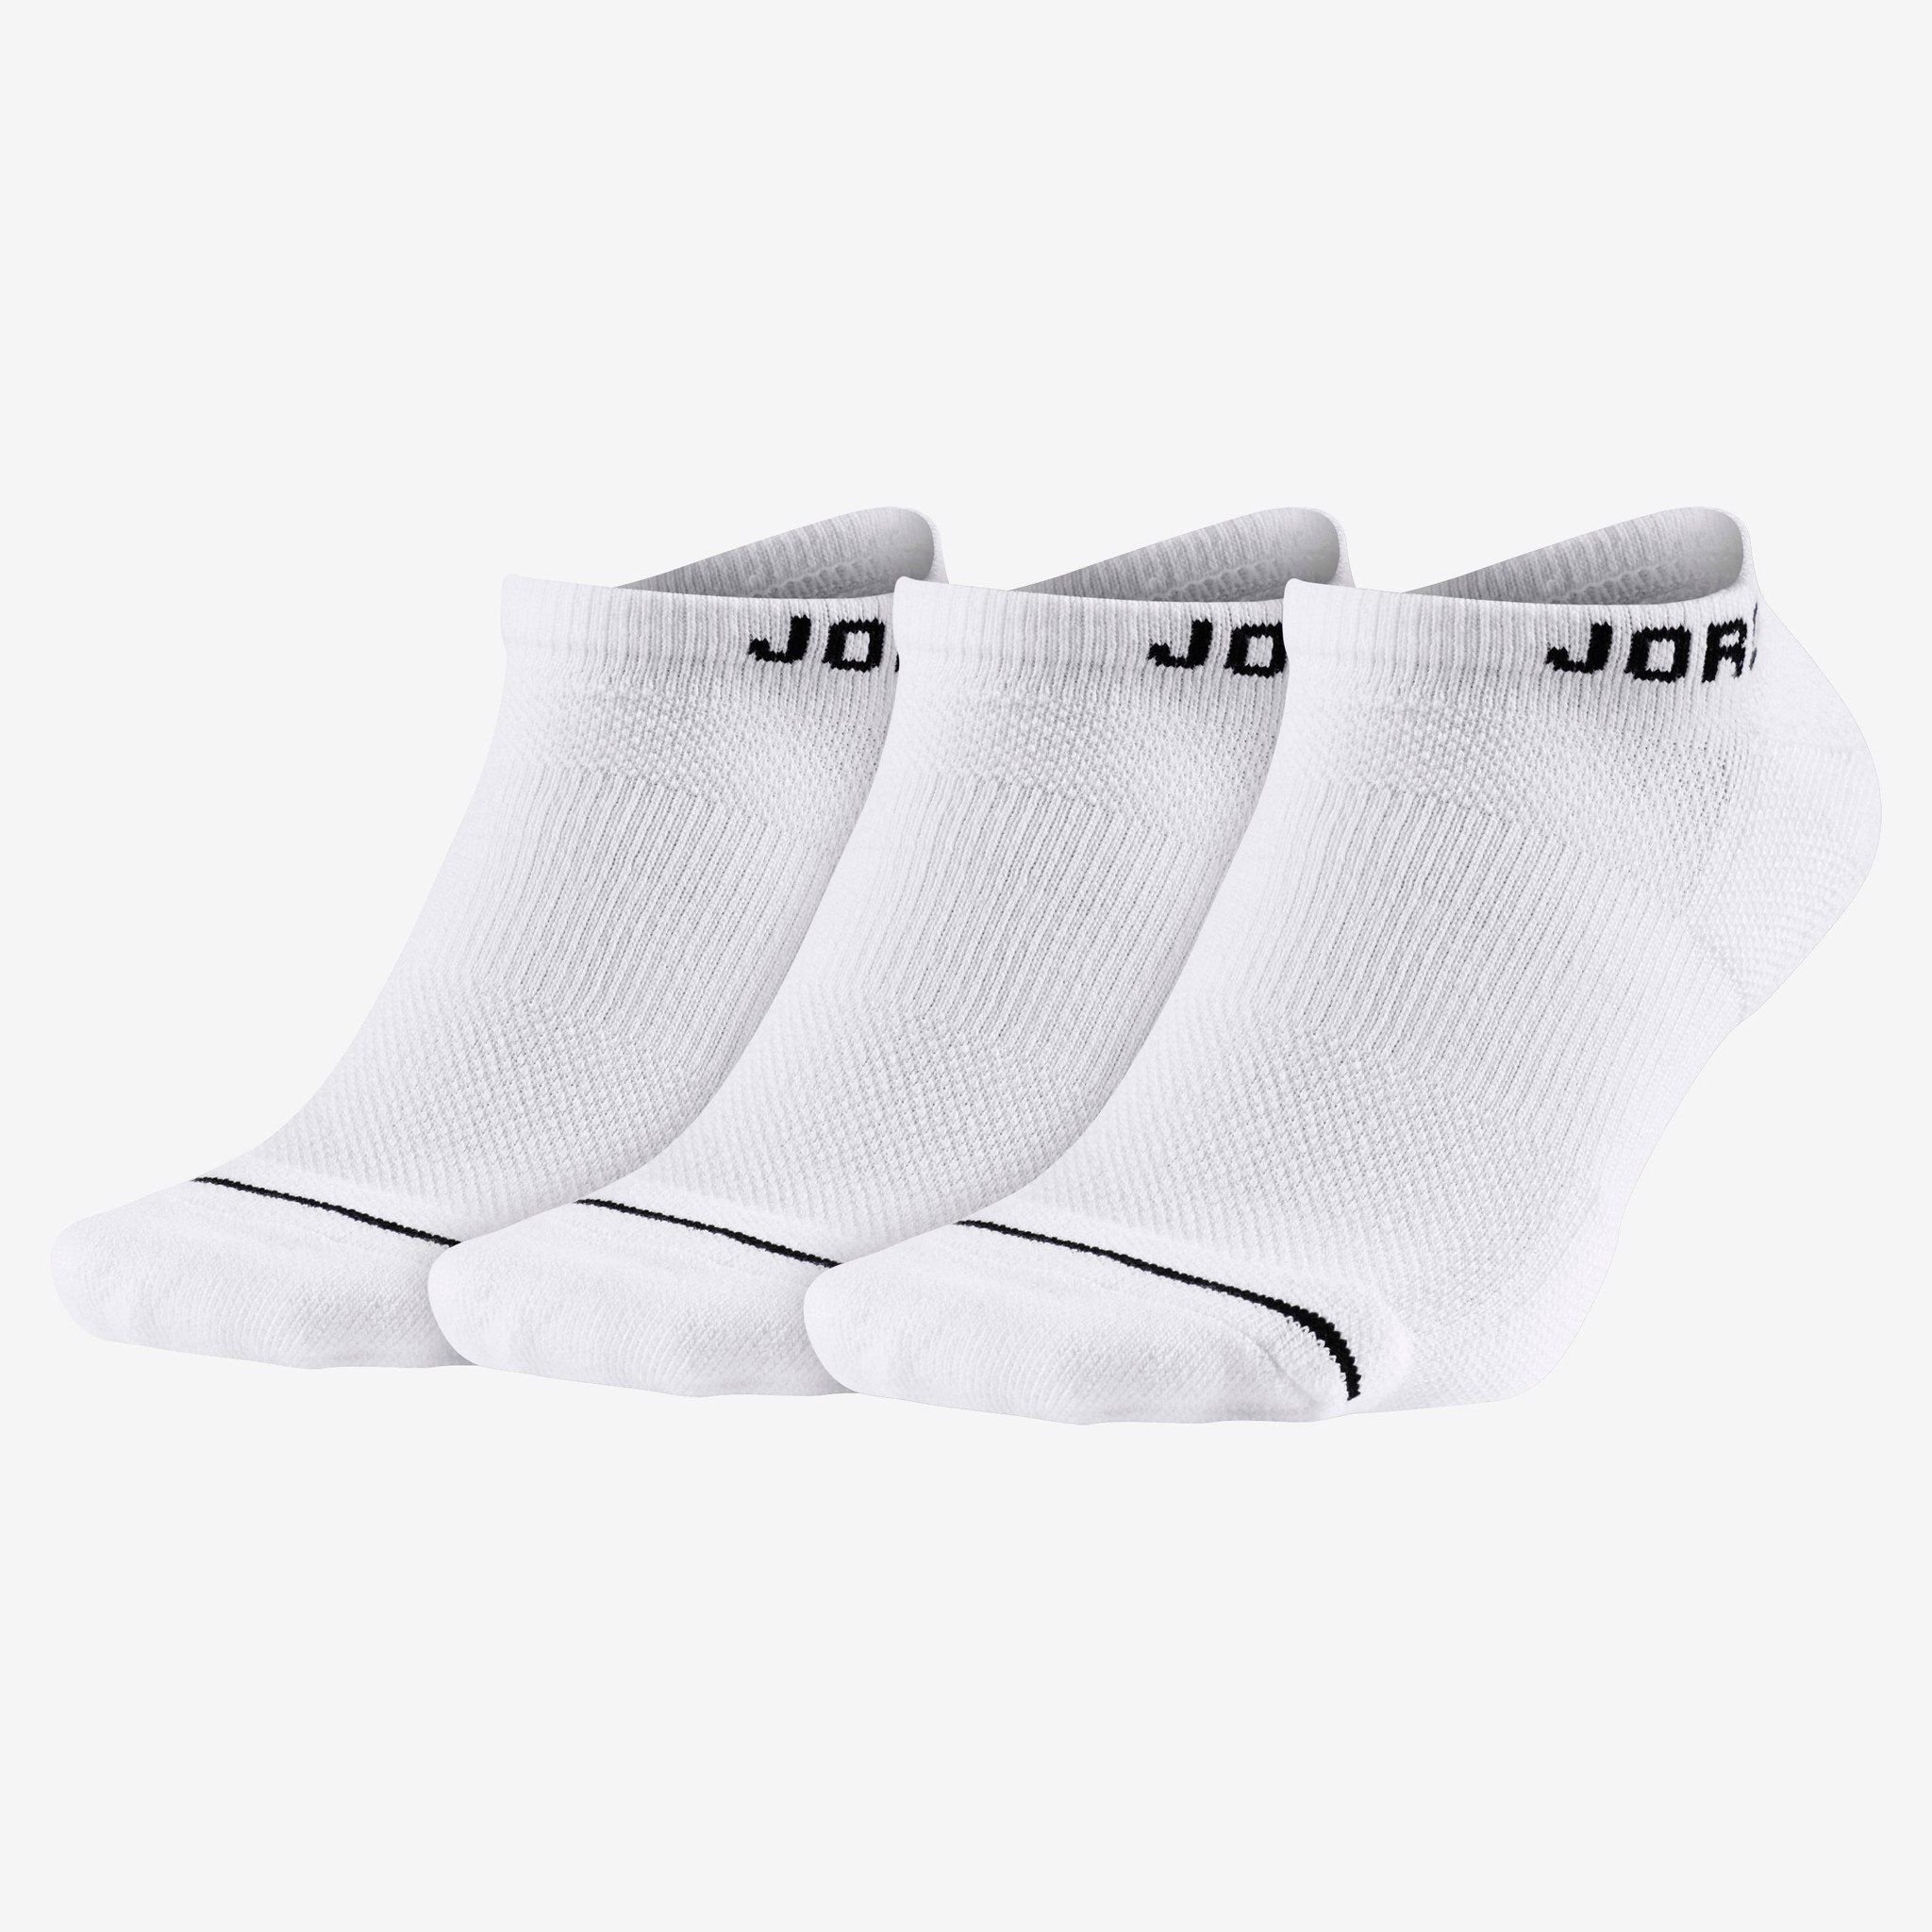  Jordan Everyday Max No-Show Socks (3 Pairs) - White 